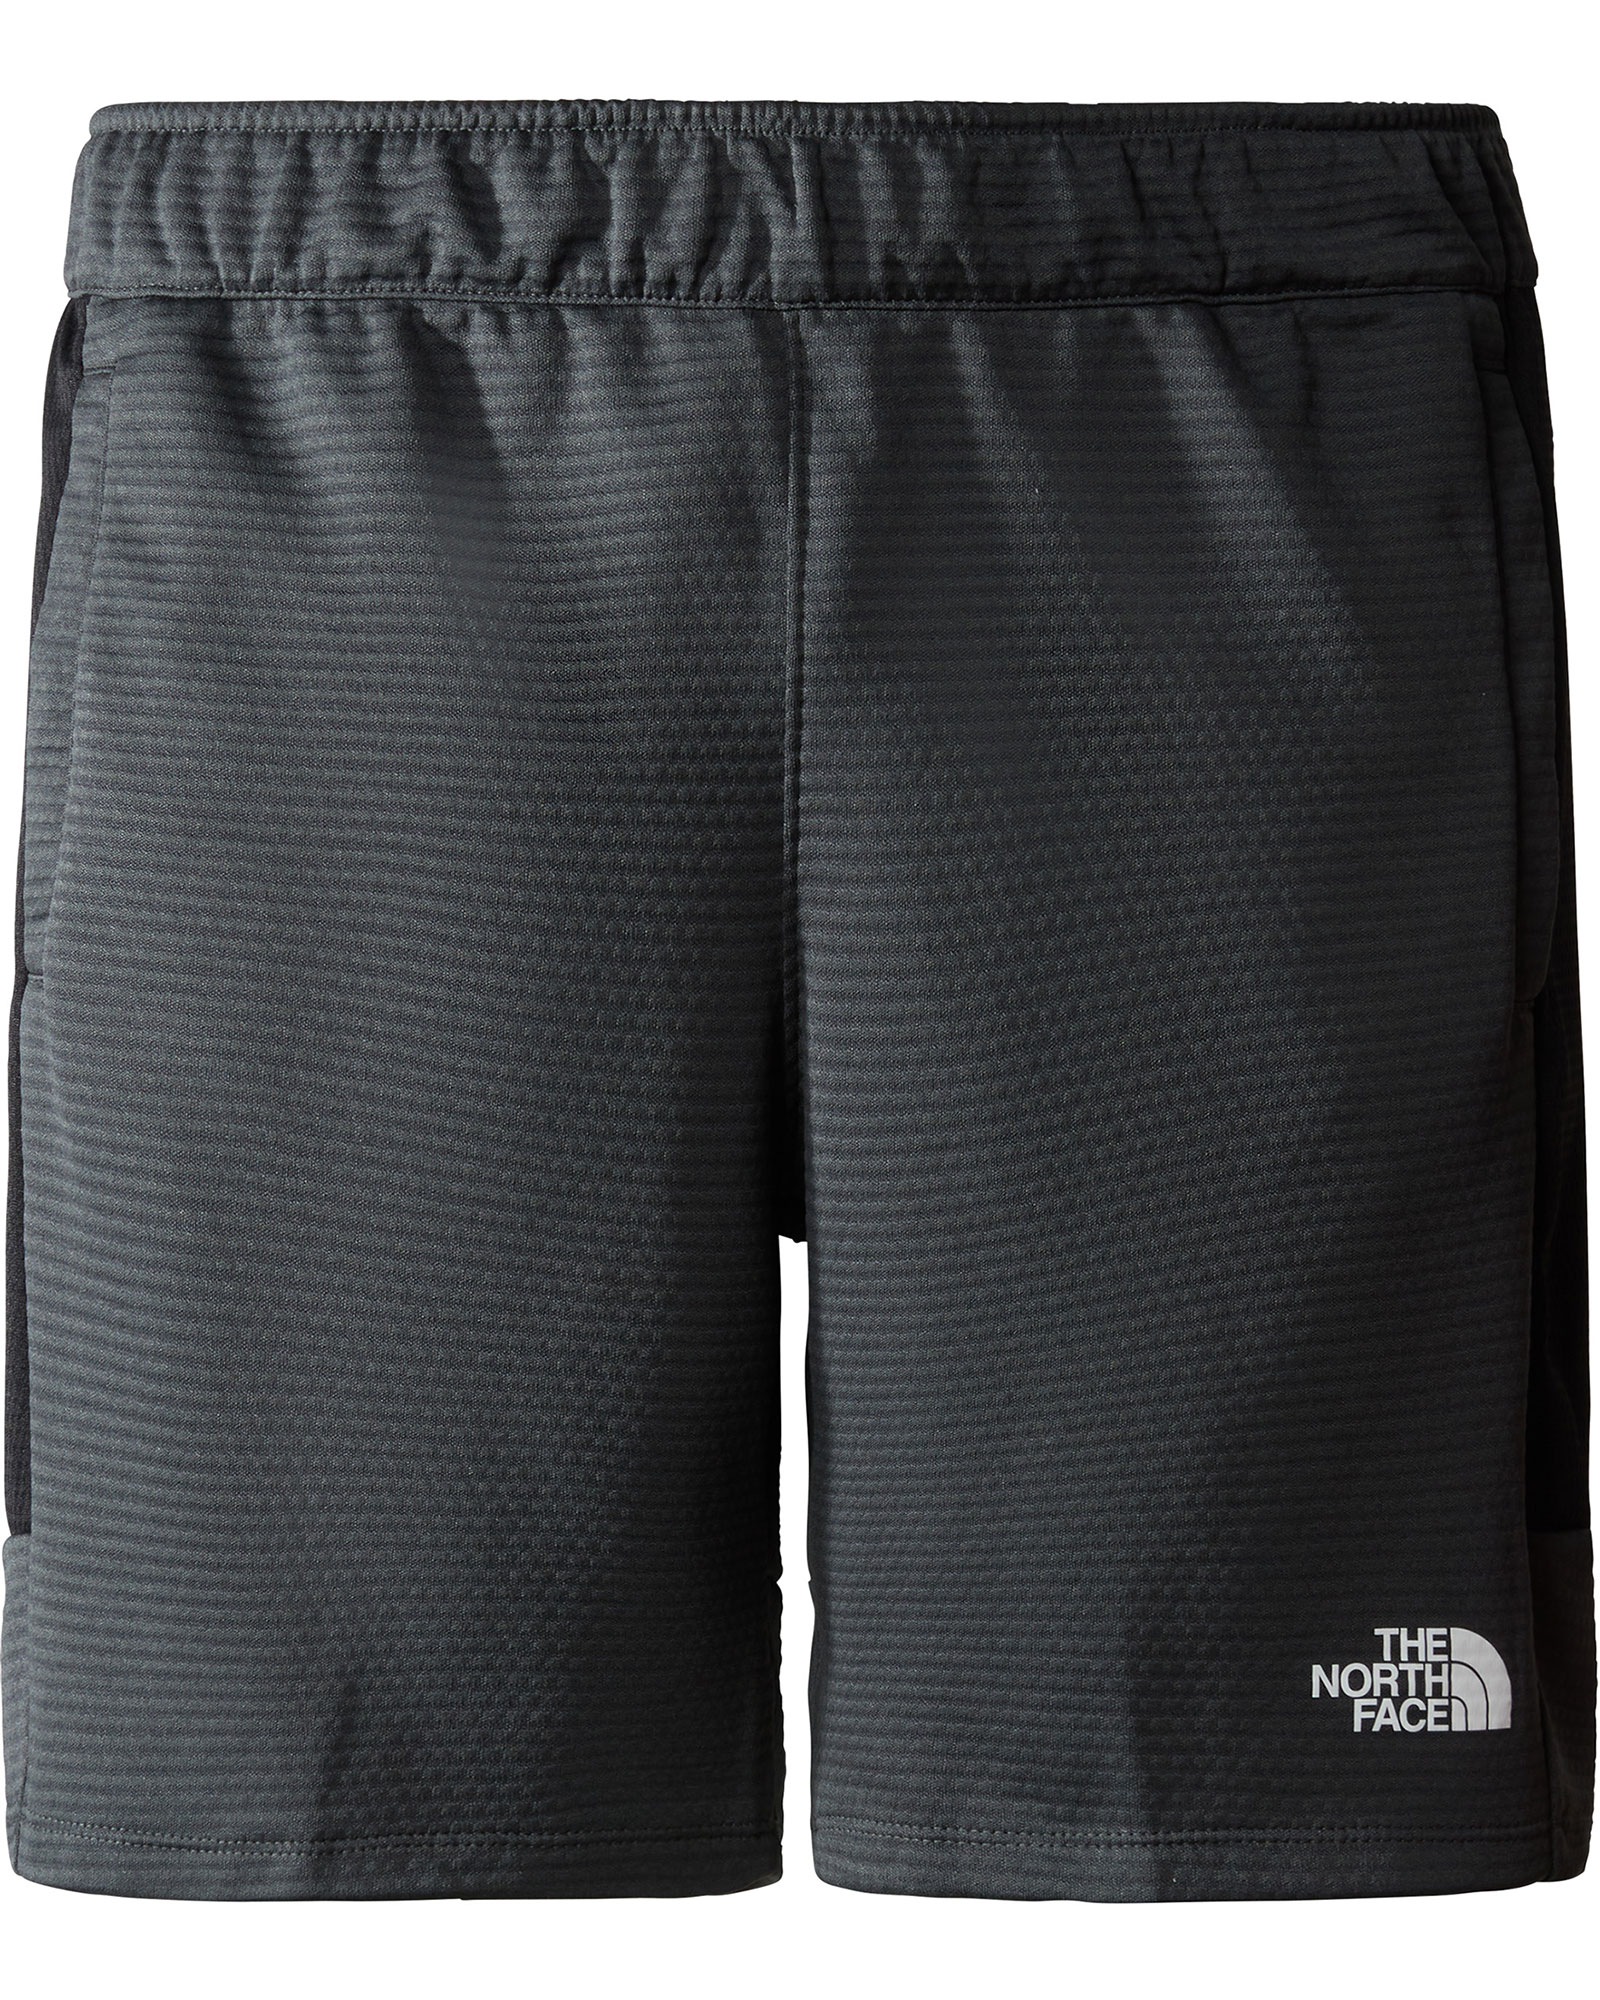 The North Face Men’s MA Fleece Shorts - Asphalt Grey-TNF Black L